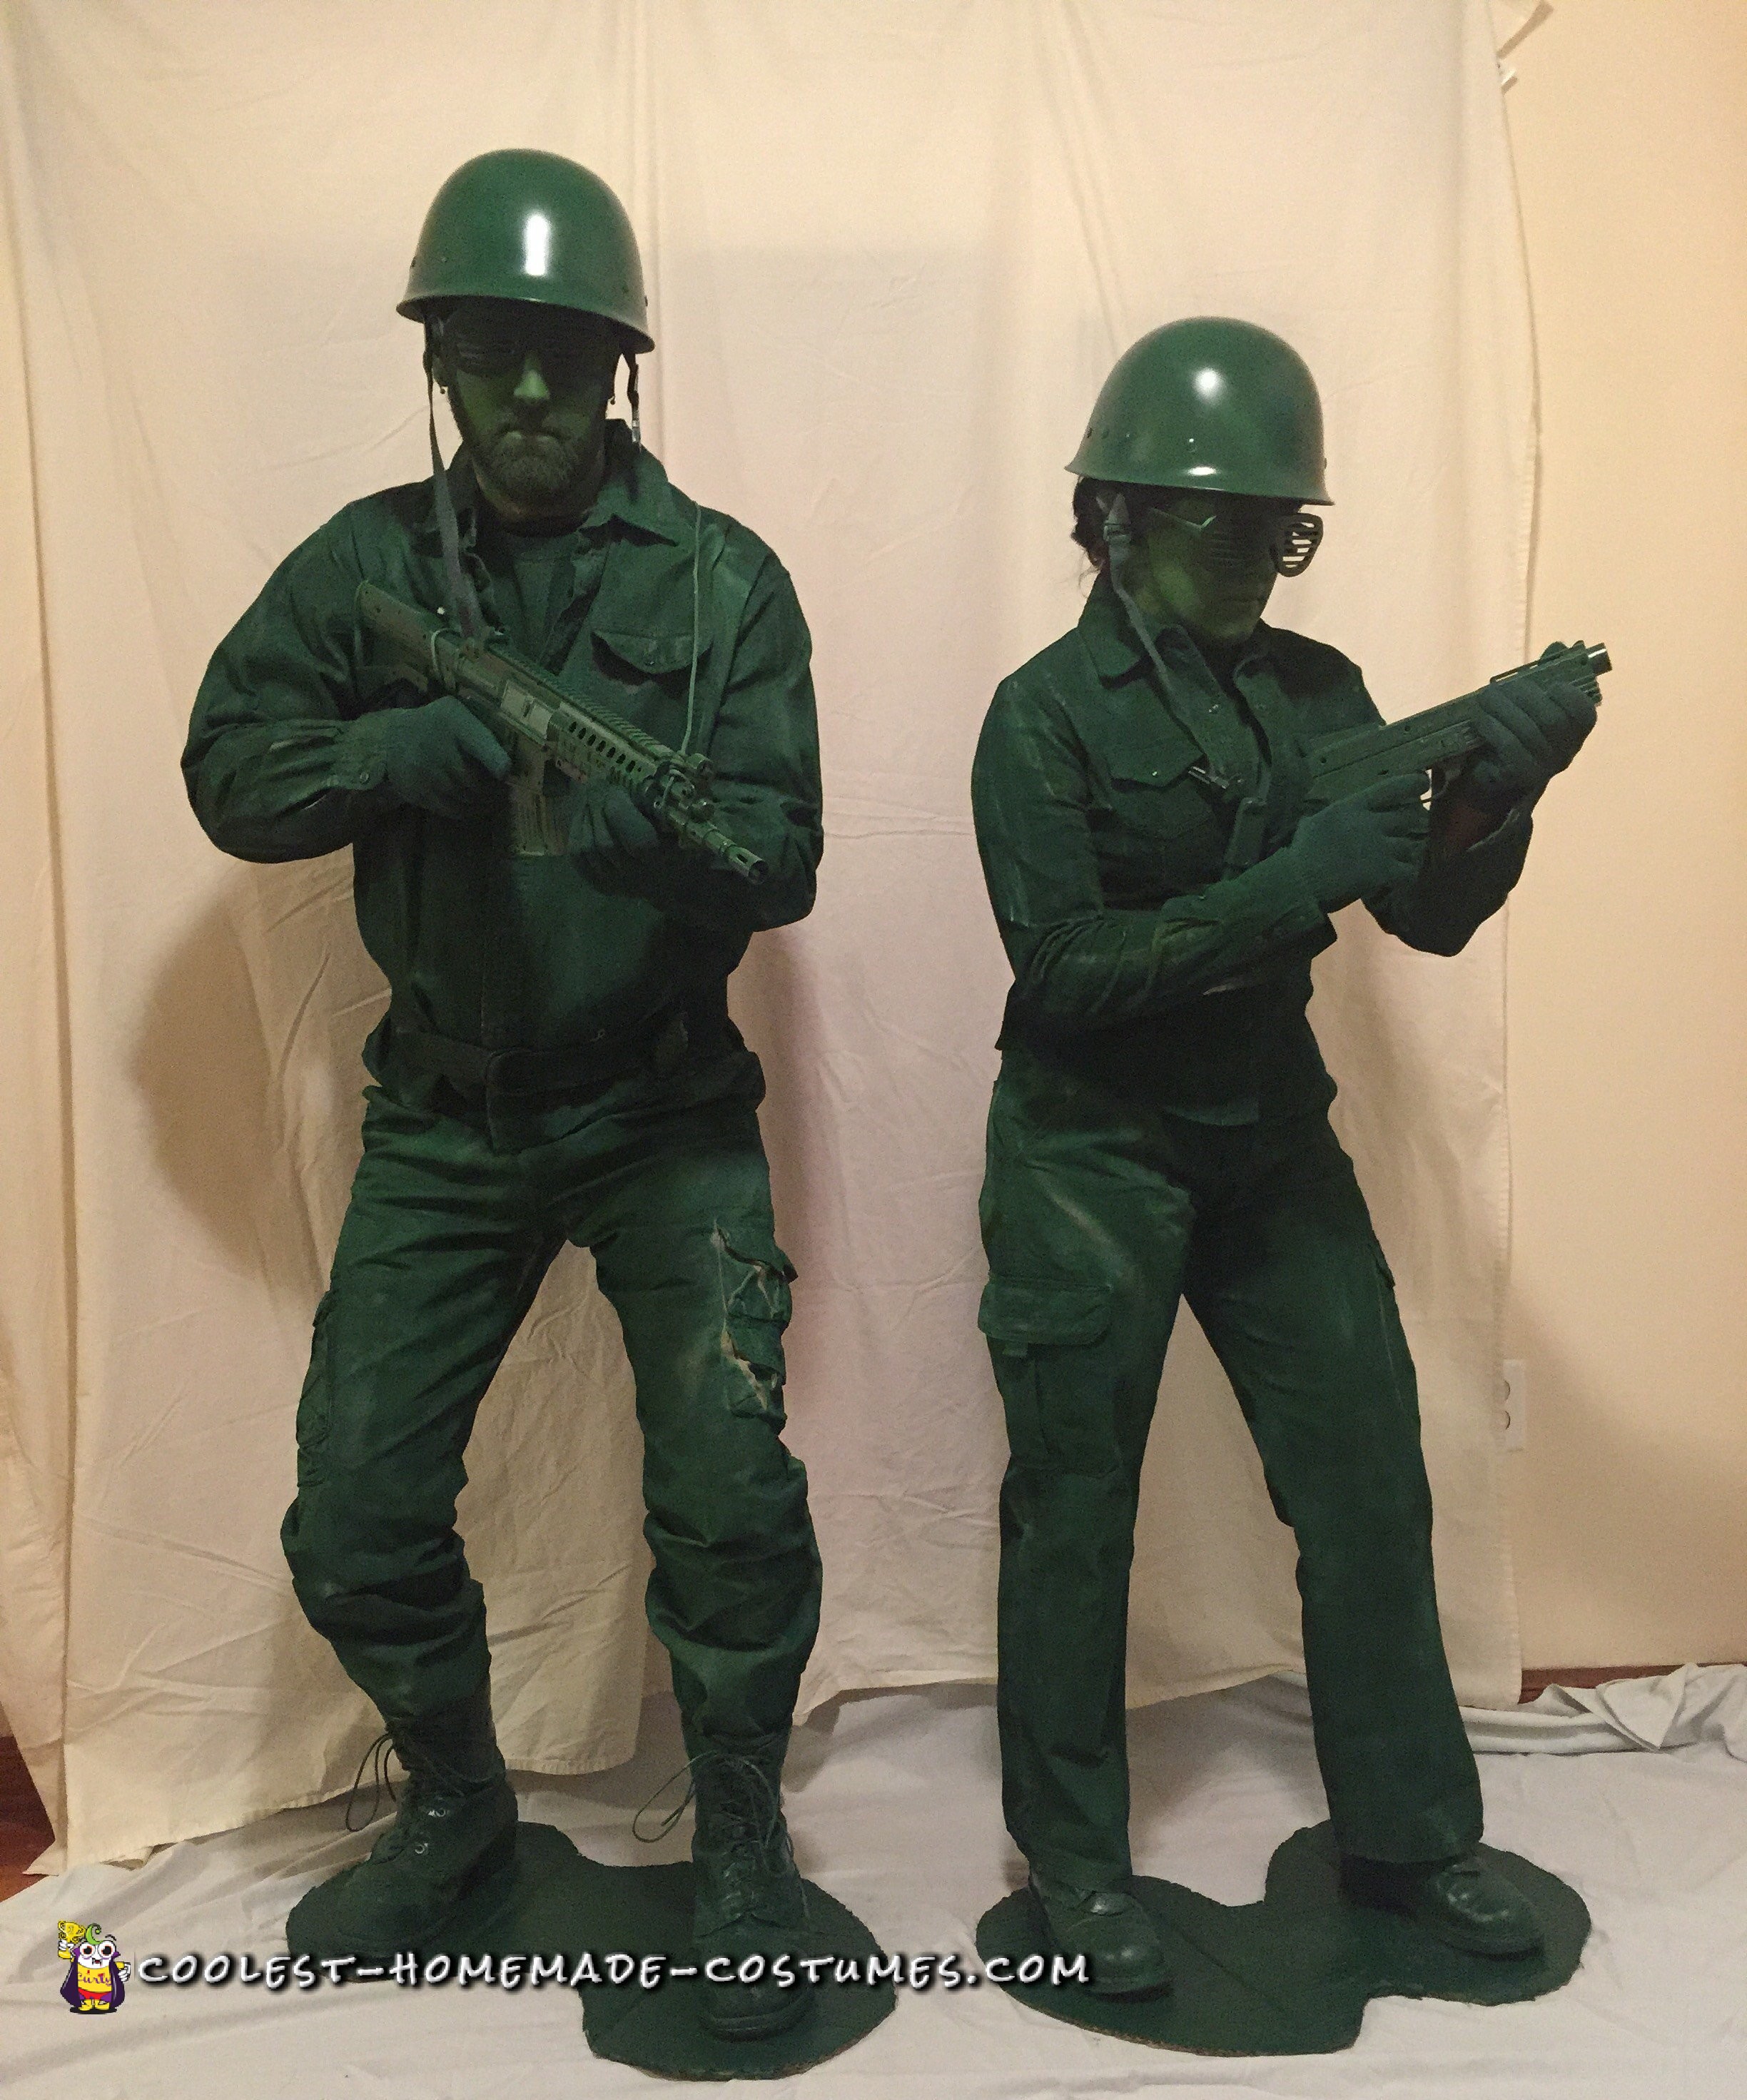 Plastic Army Man Costumes